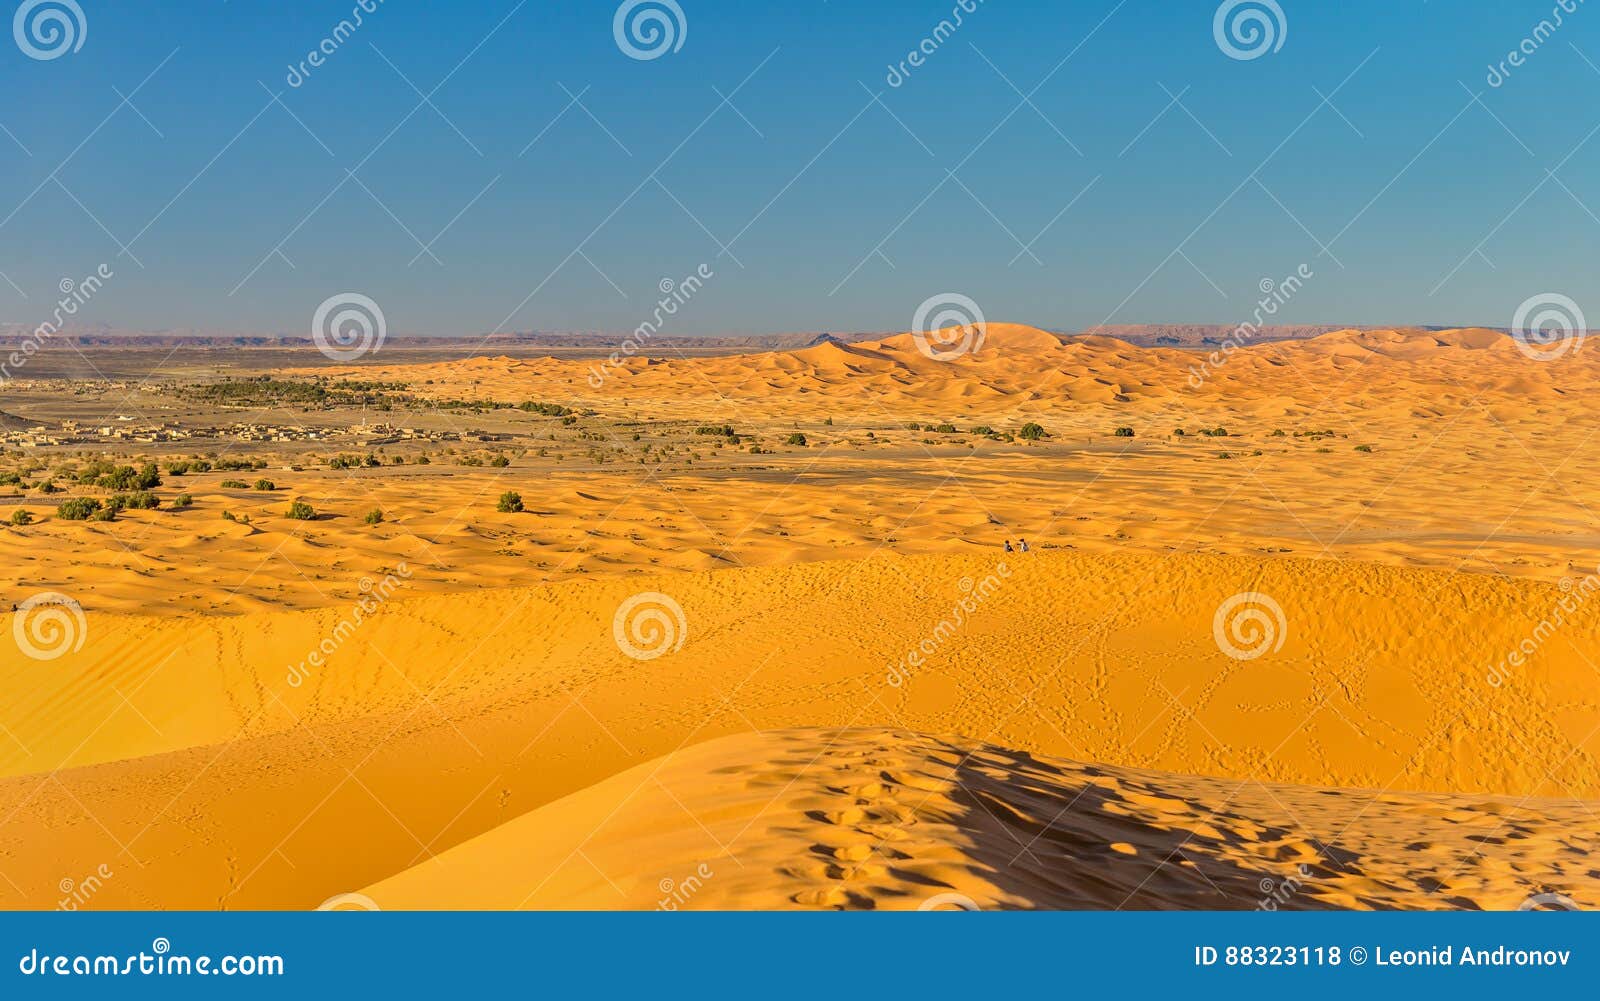 dunes of erg chebbi near merzouga in morocco